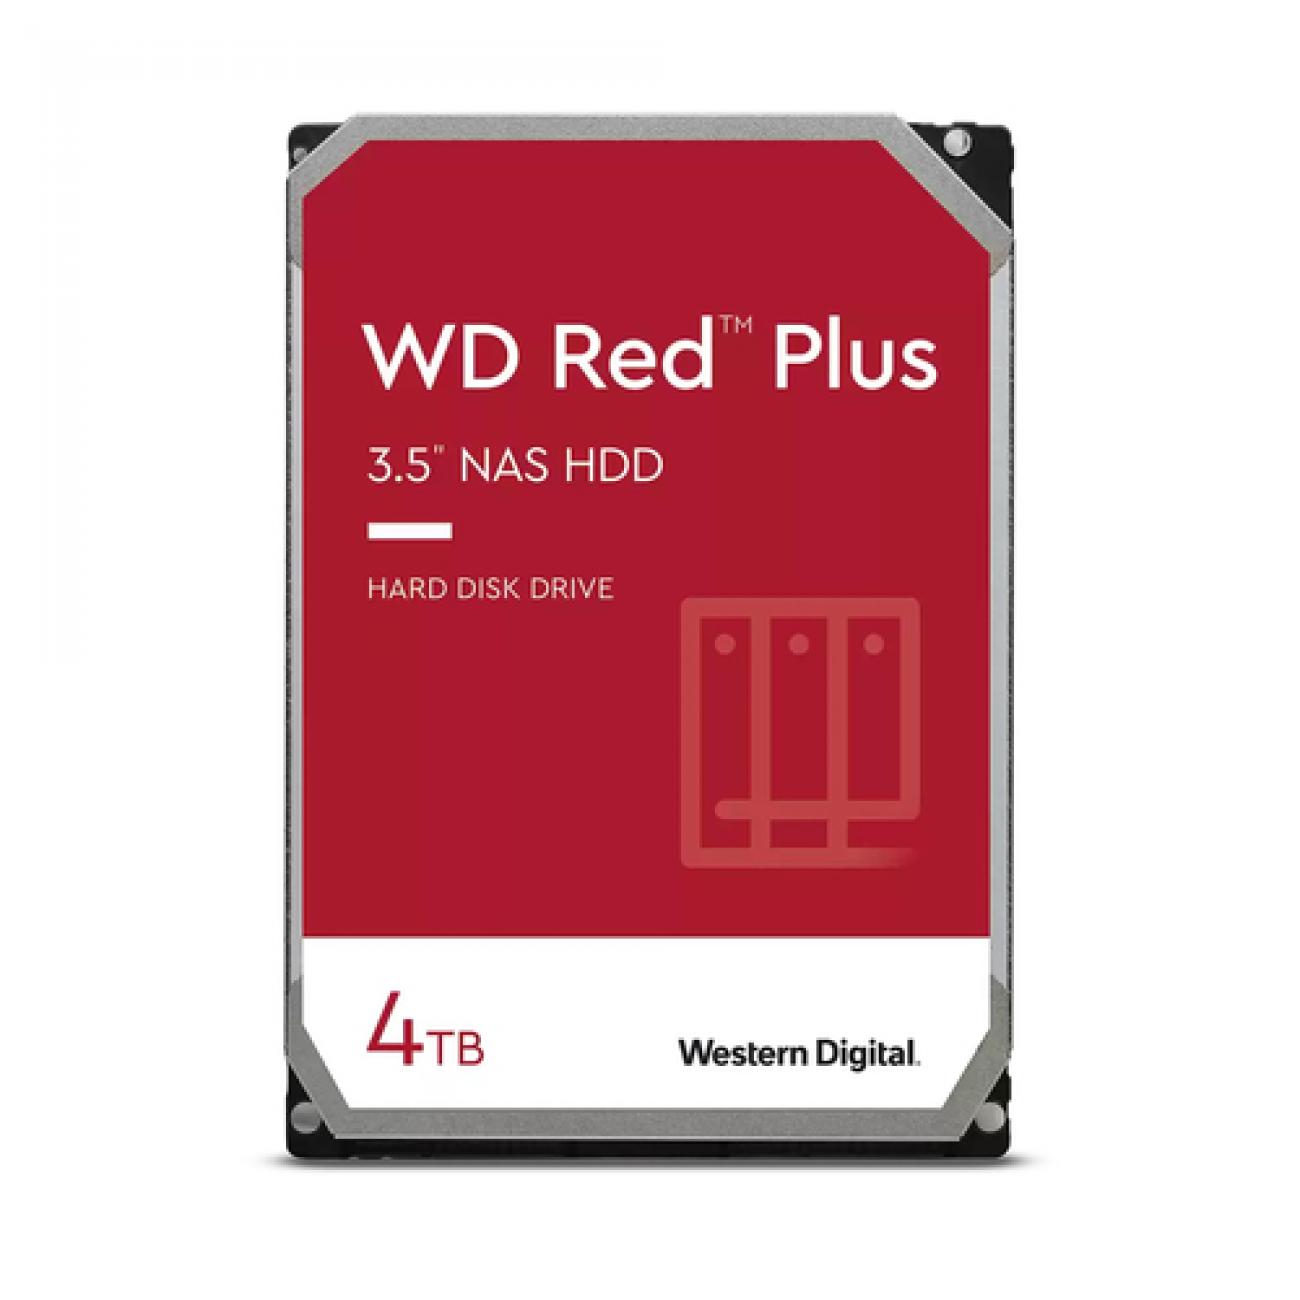 WESTERN DIGITAL HDD RED PLUS 4TB 3,5" 5400RPM SATA 6GB/S BUFFER 256MB WESTERN DIGITAL